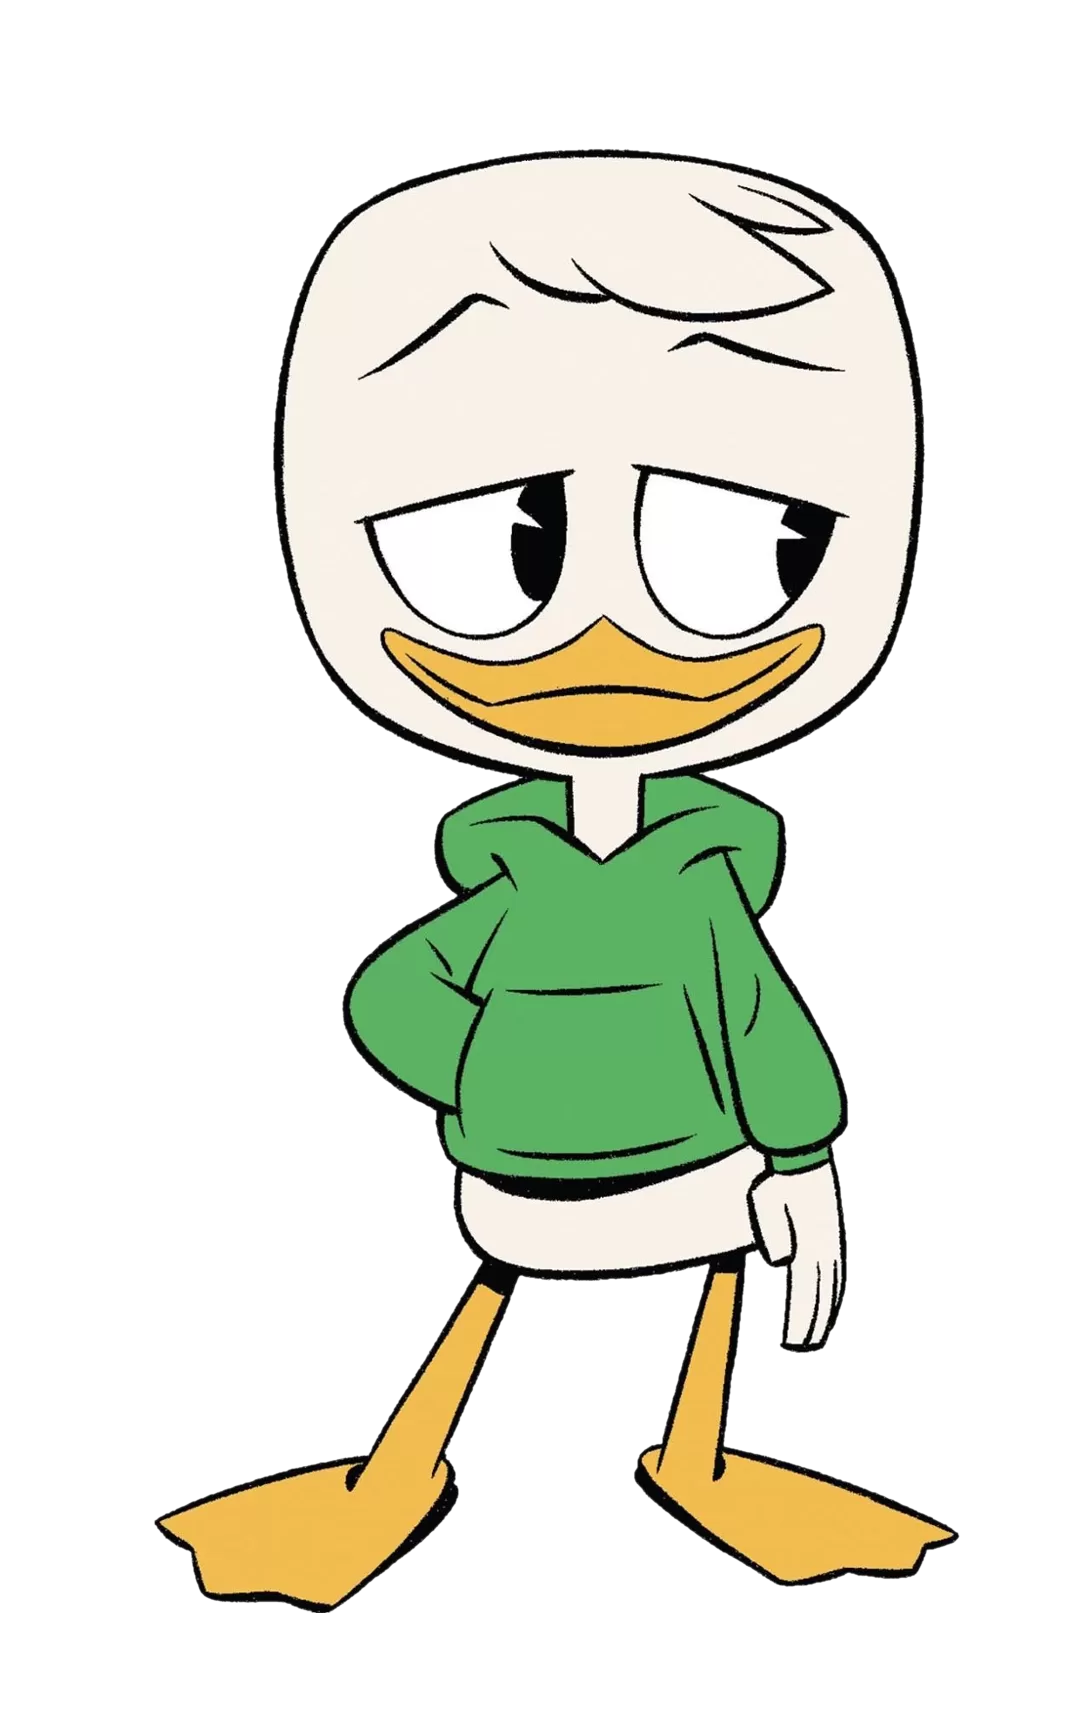 Qua personaggio Ducktales